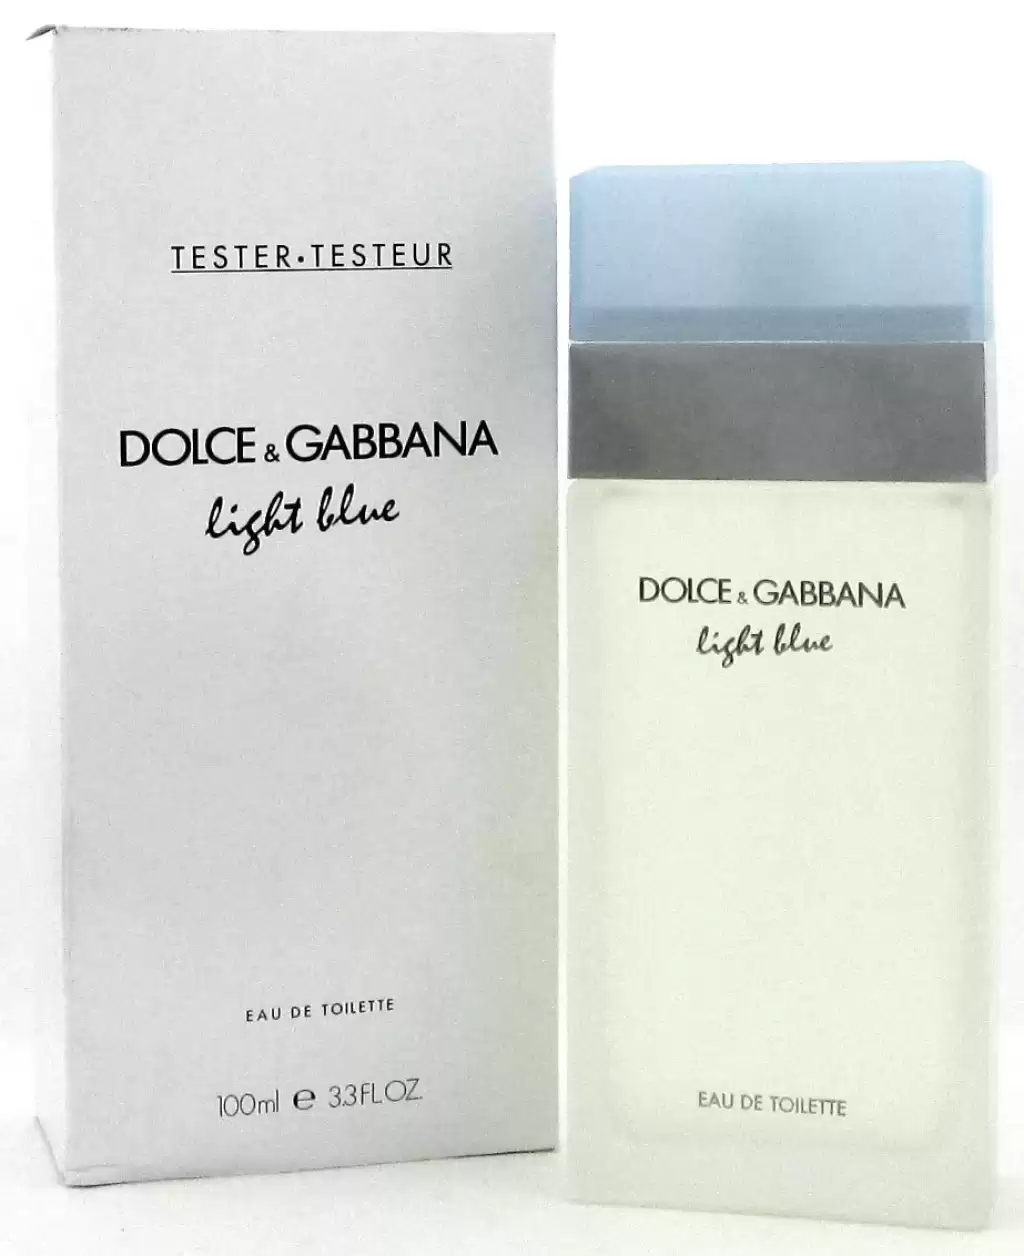 Тестер дольче габбана. D&G Light Blue EDT 100ml Tester. Dolce & Gabbana Light Blue женские 100ml Tester. Dolce Gabbana Light Blue тестер 100 мл. Dolce&Gabbana Light Blue Eau 100ml EDT.